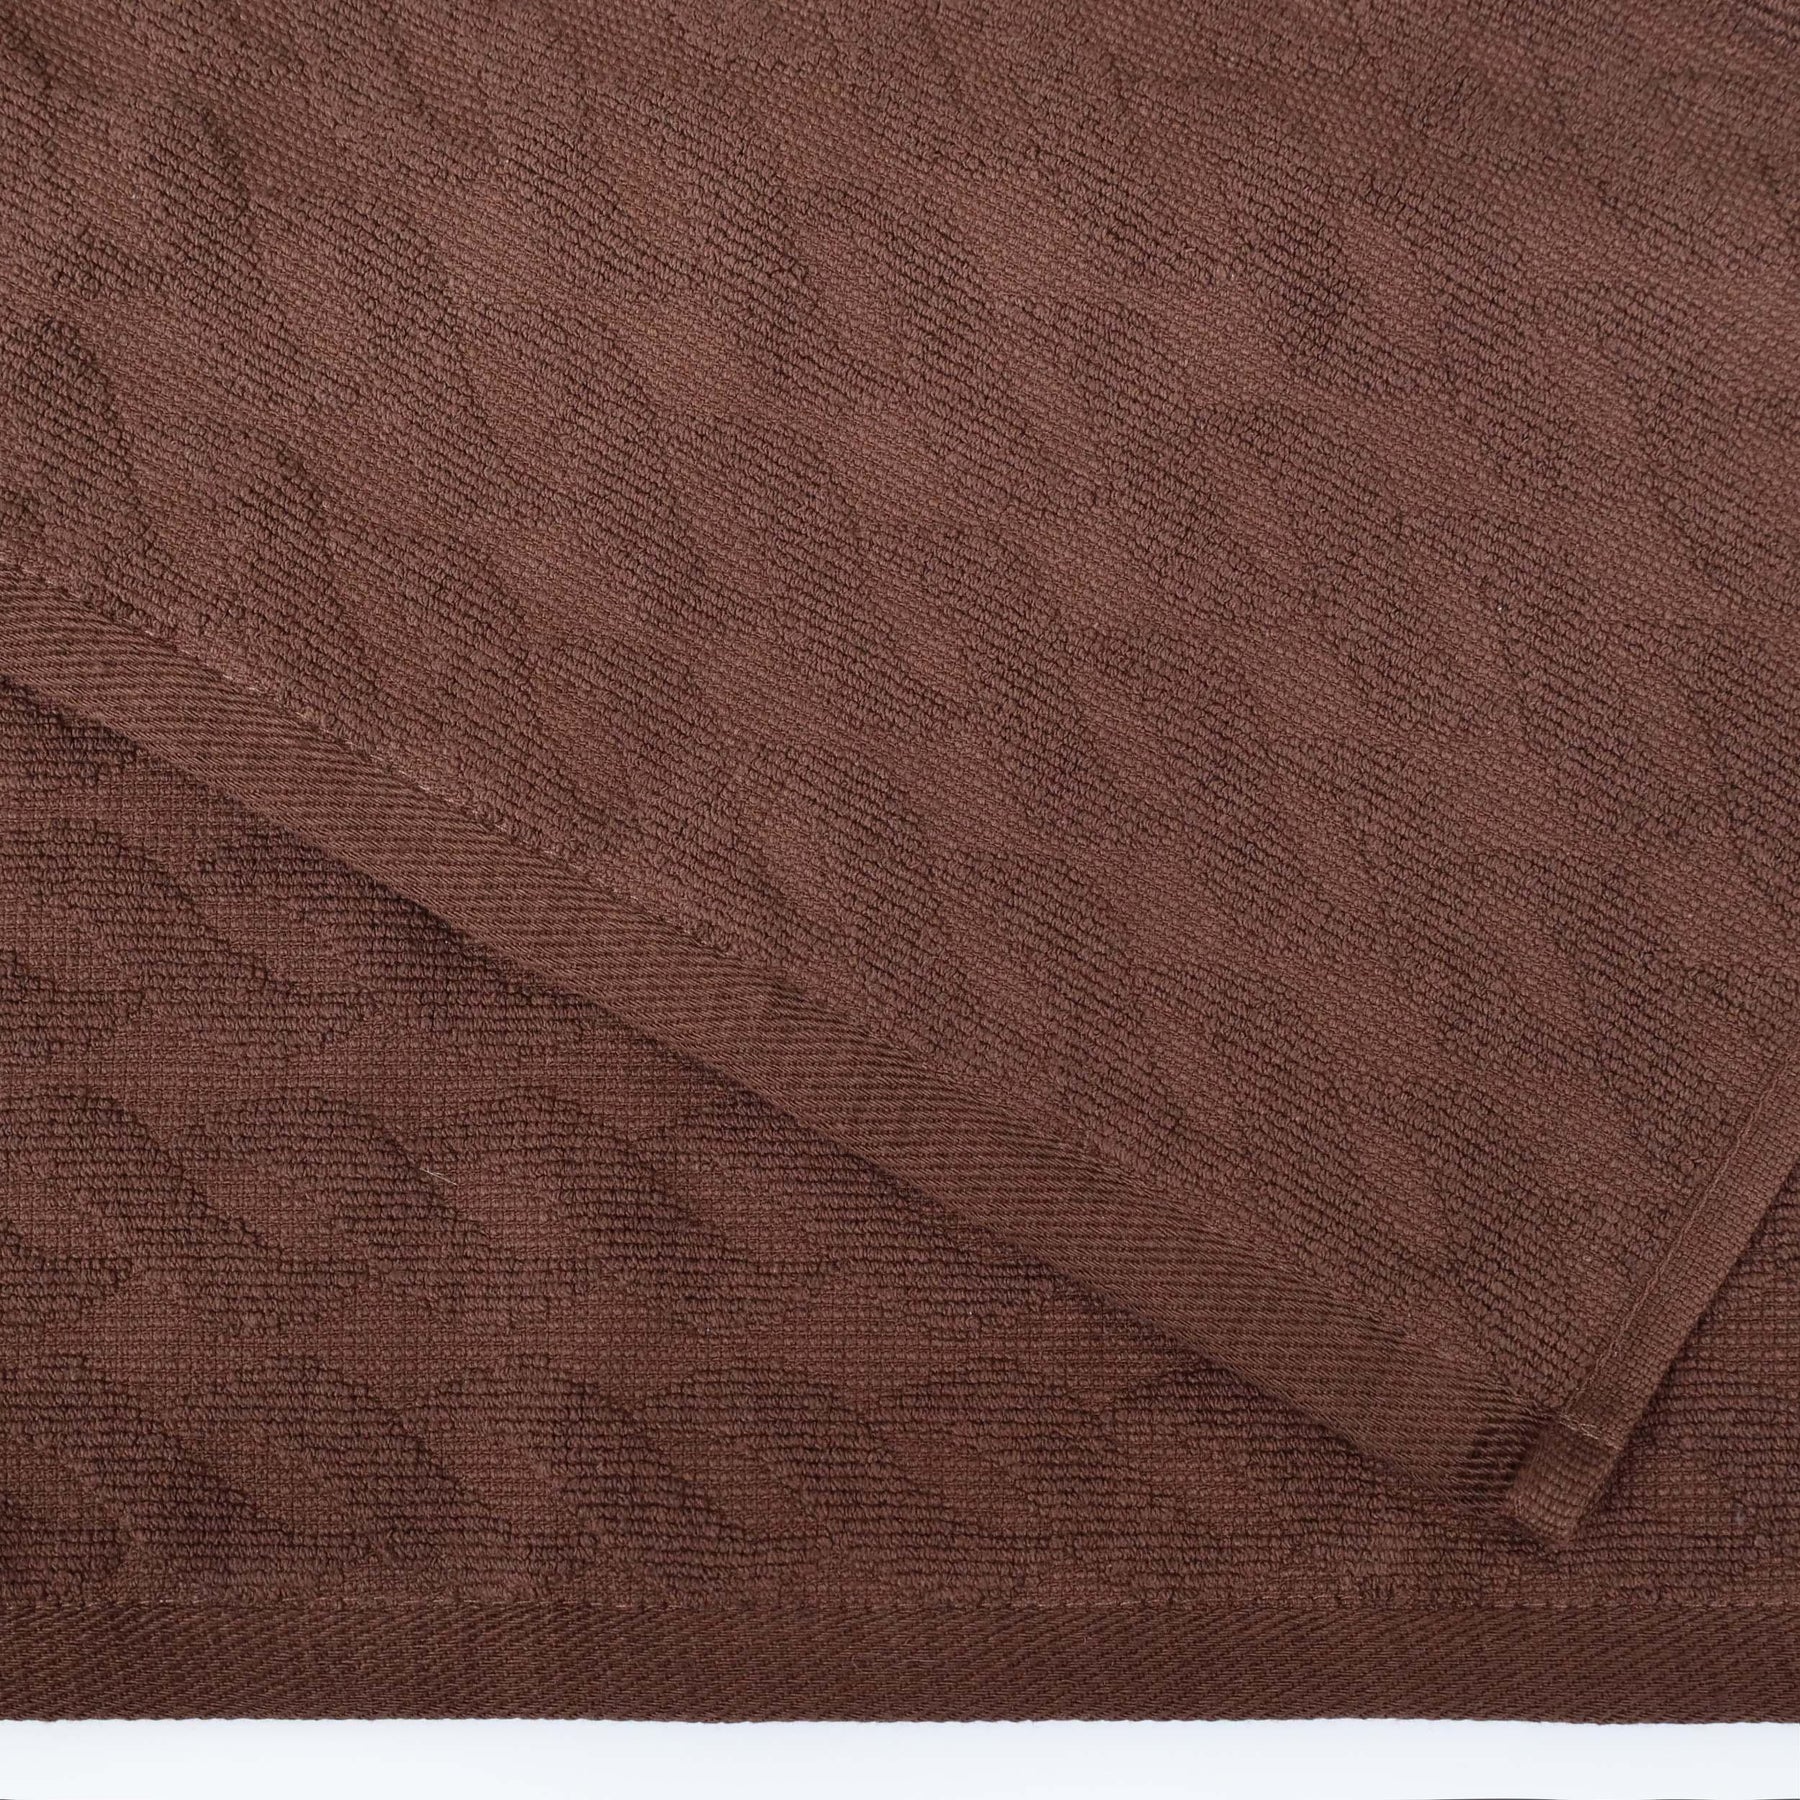 Premium Turkish Cotton Herringbone Jacquard Assorted 6-Piece Towel Set -  Chocolate